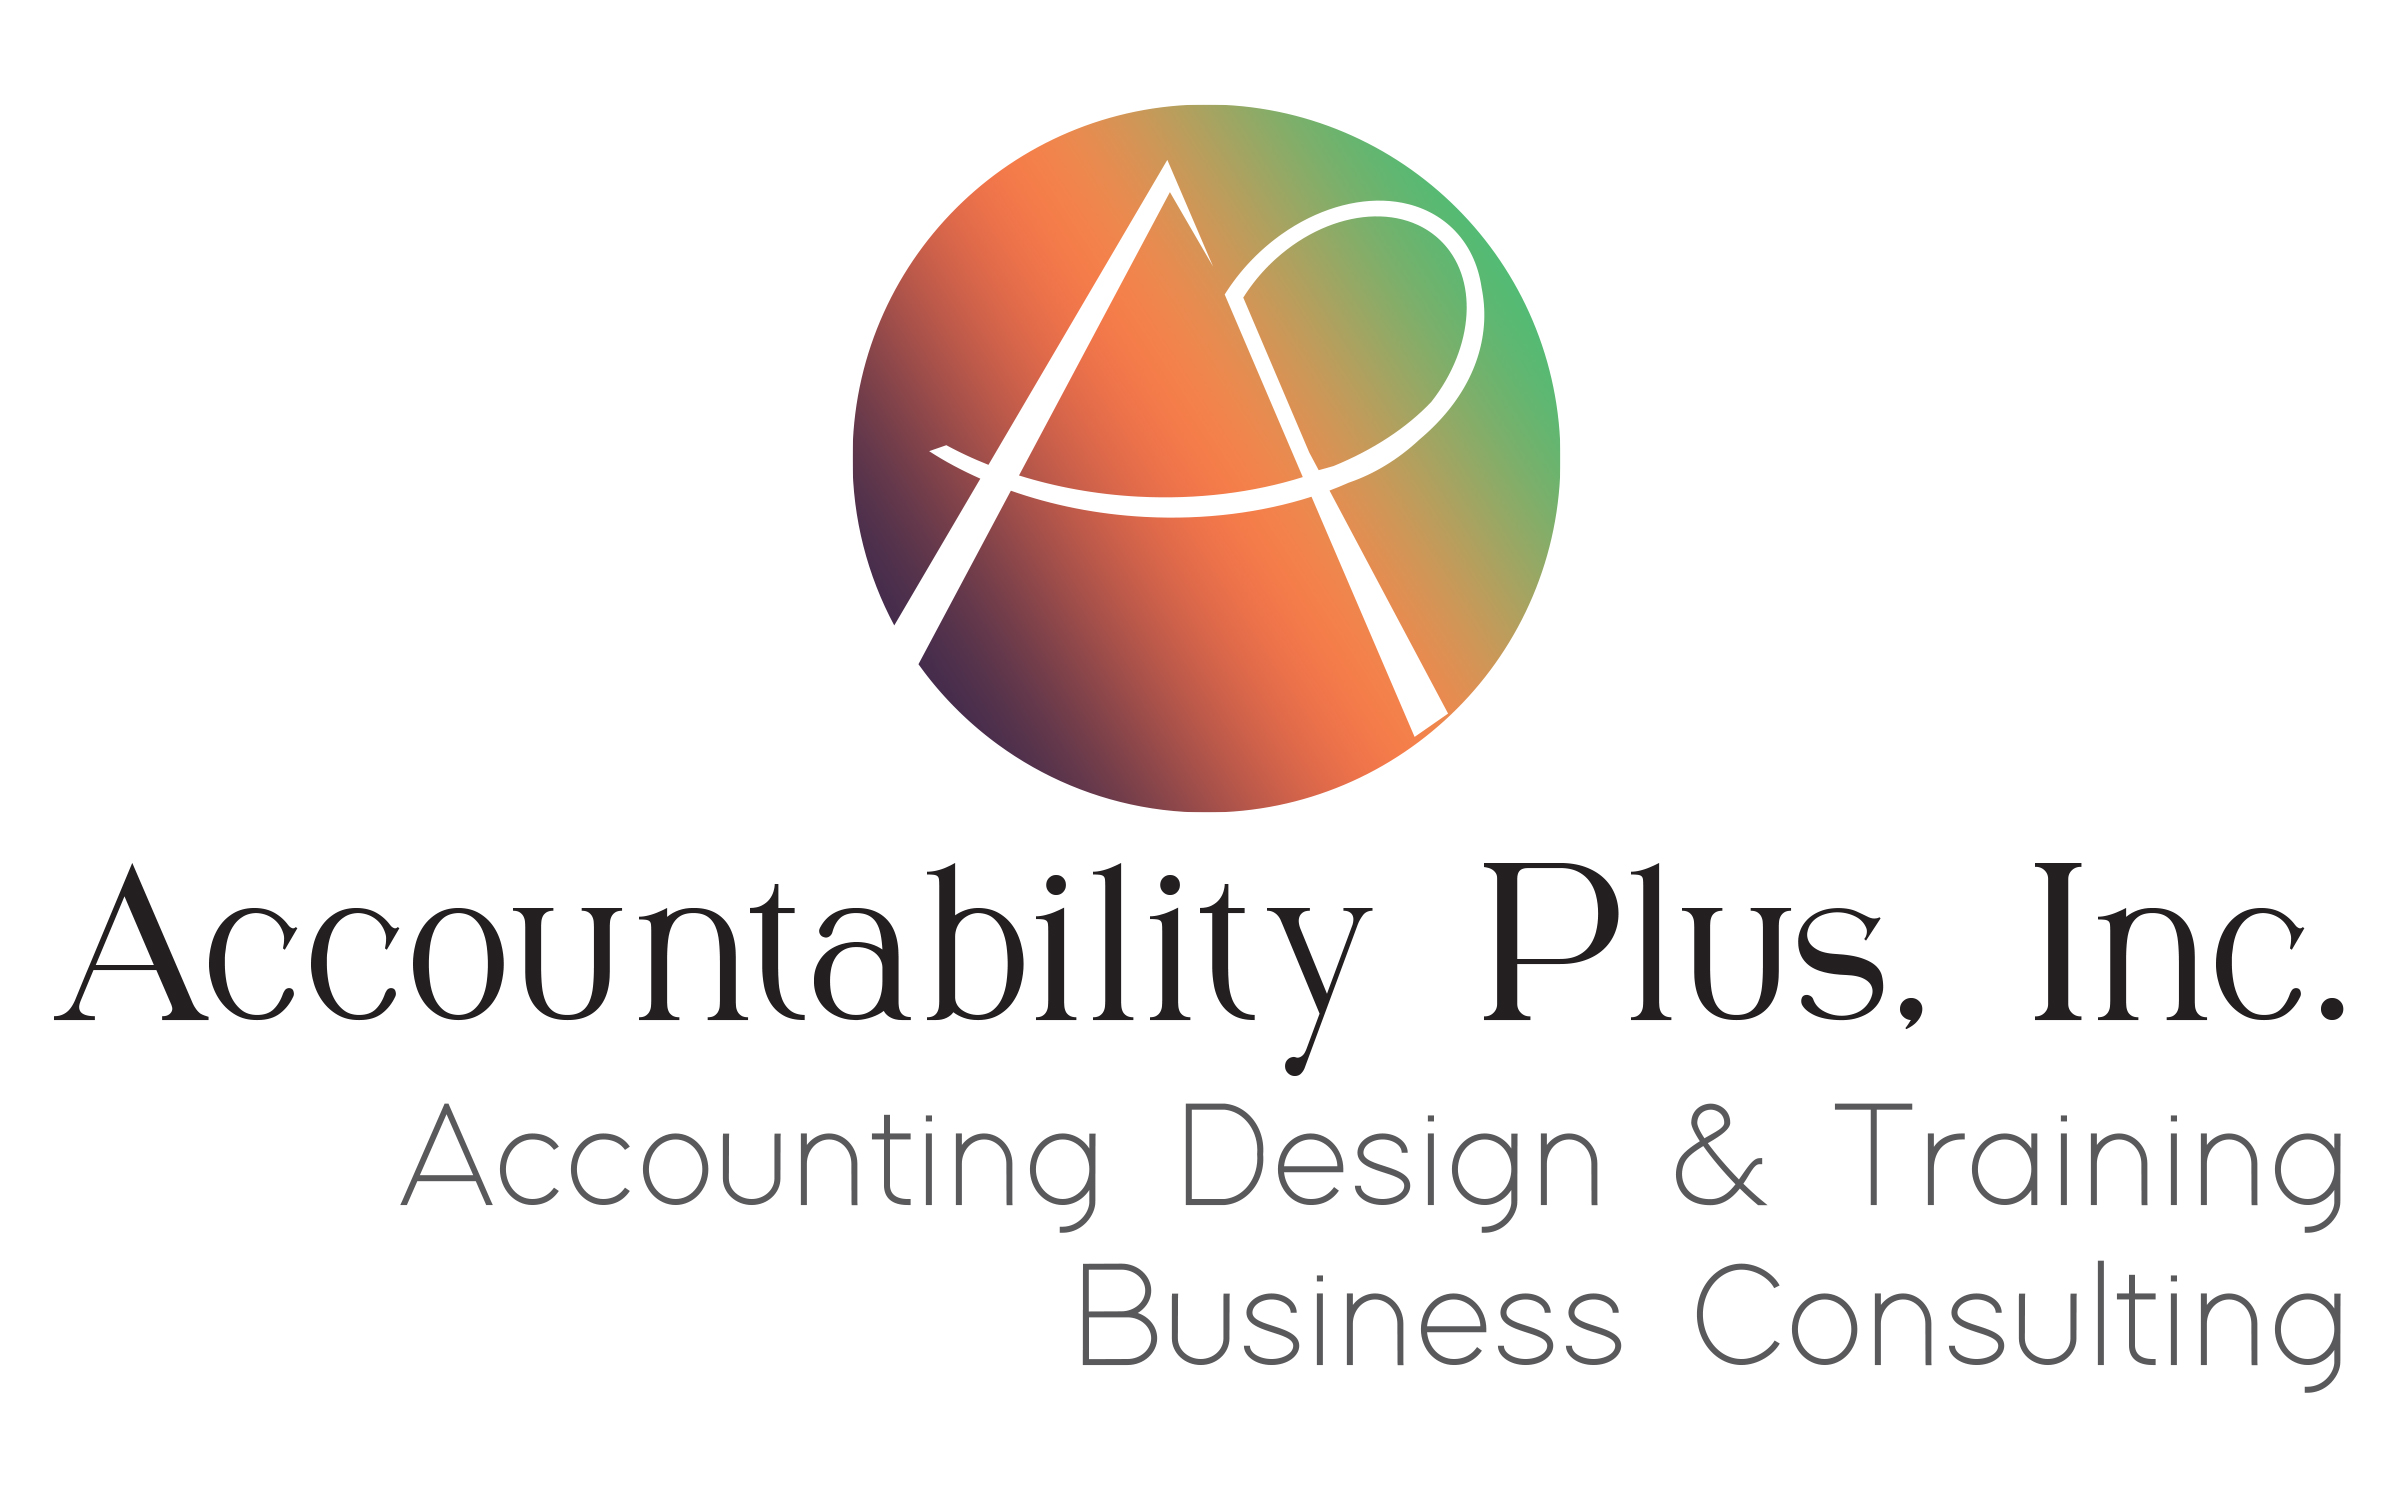 Accountability Plus's Image